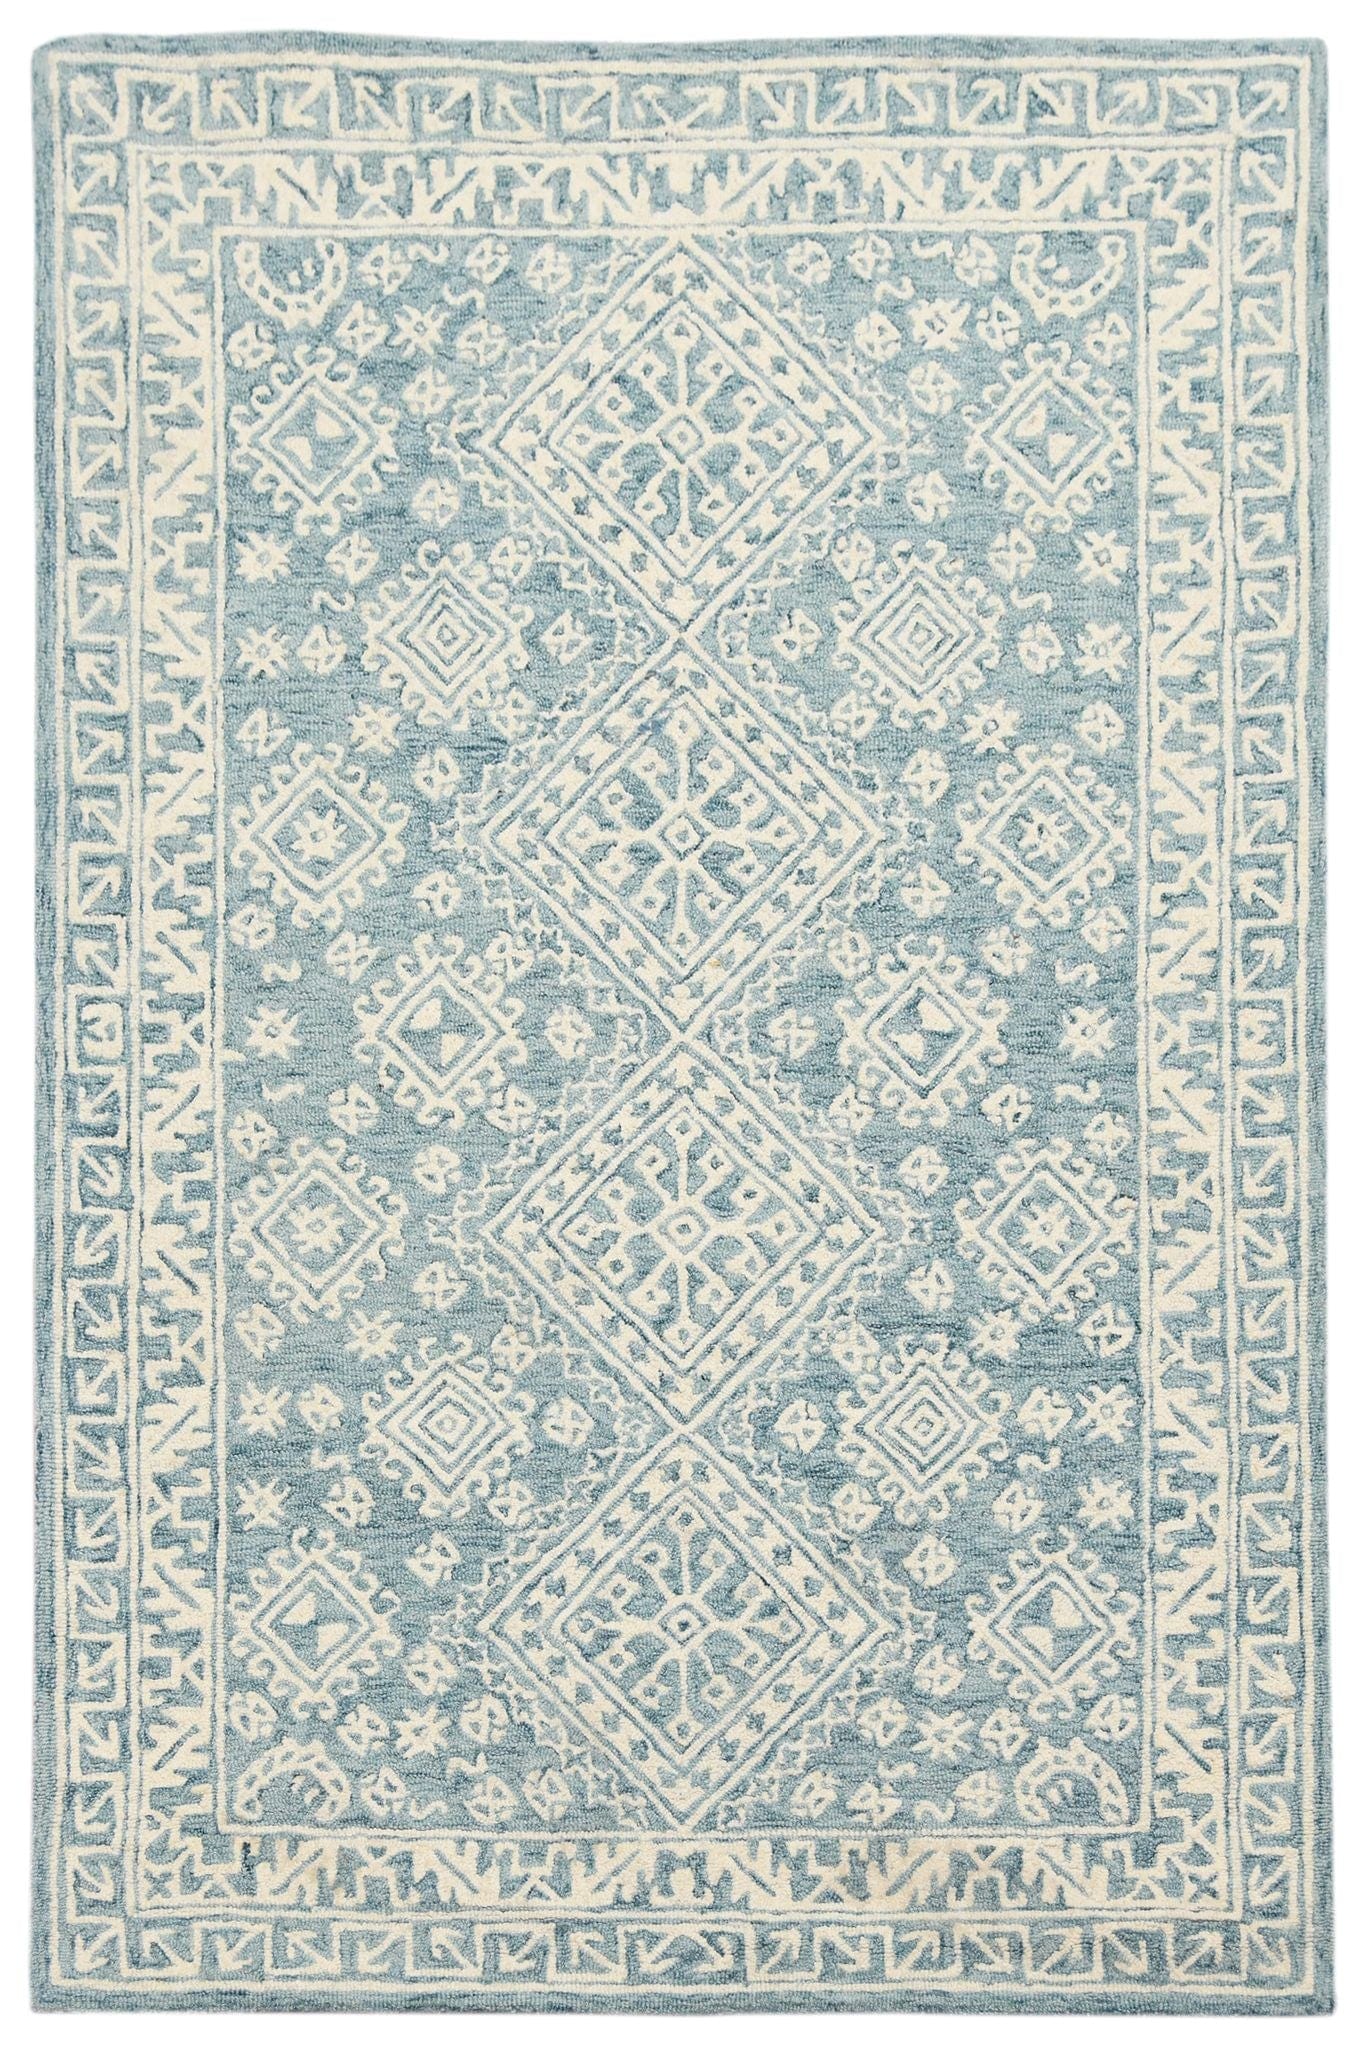 Teal Blaze Wool Boston 4x6 Feet  Hand-Tufted Carpet - Rug